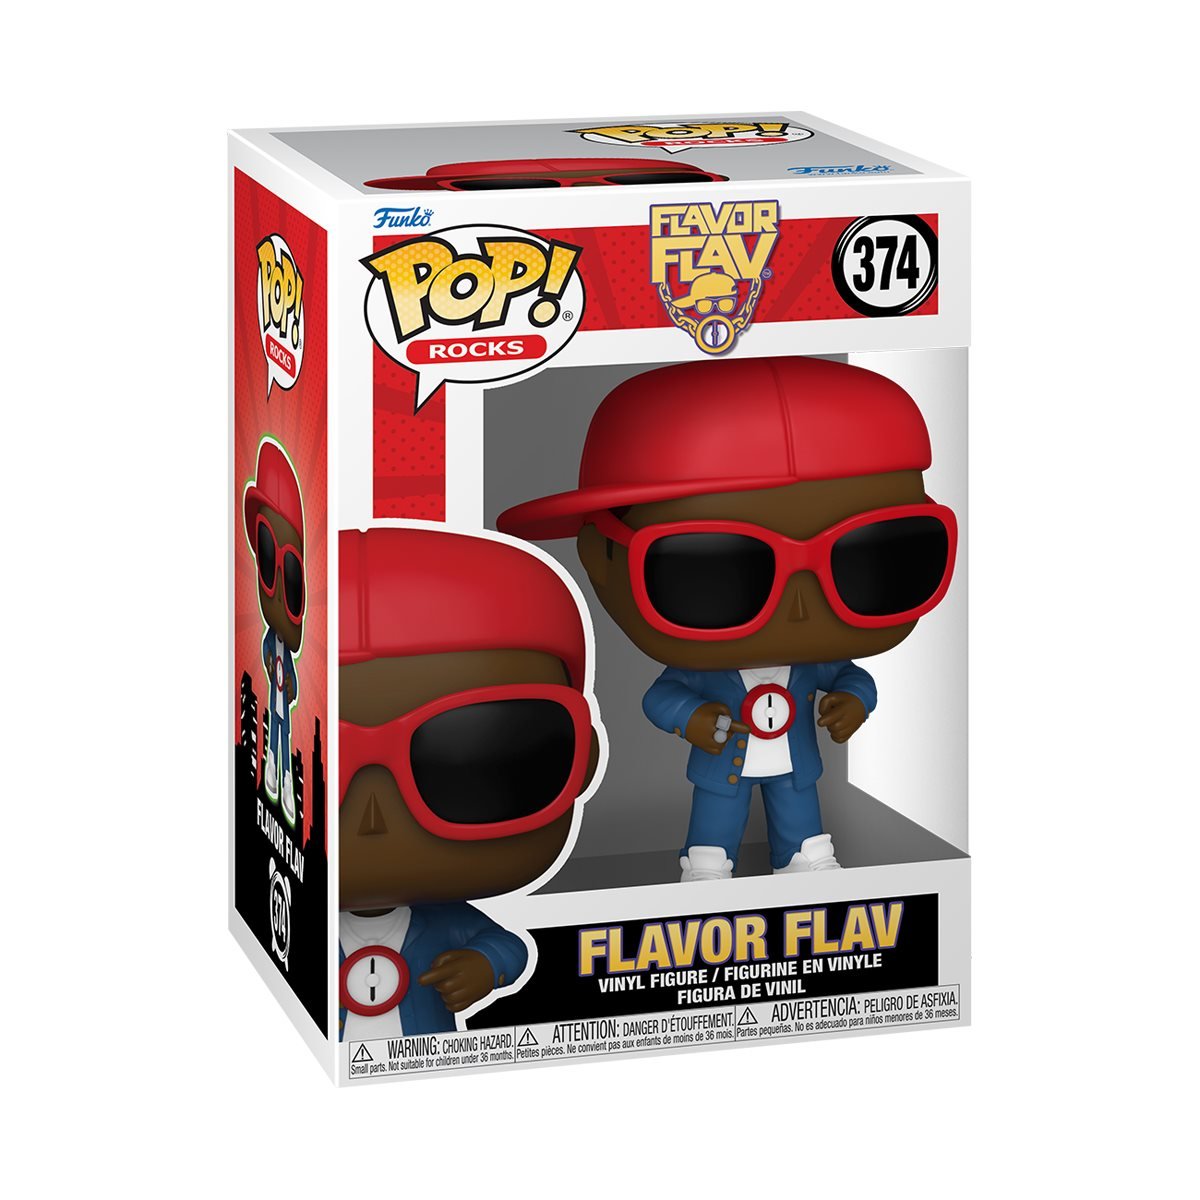 Flavor Flav Flavor of Love Funko Pop! Vinyl Figure #374 Pop-O-Loco